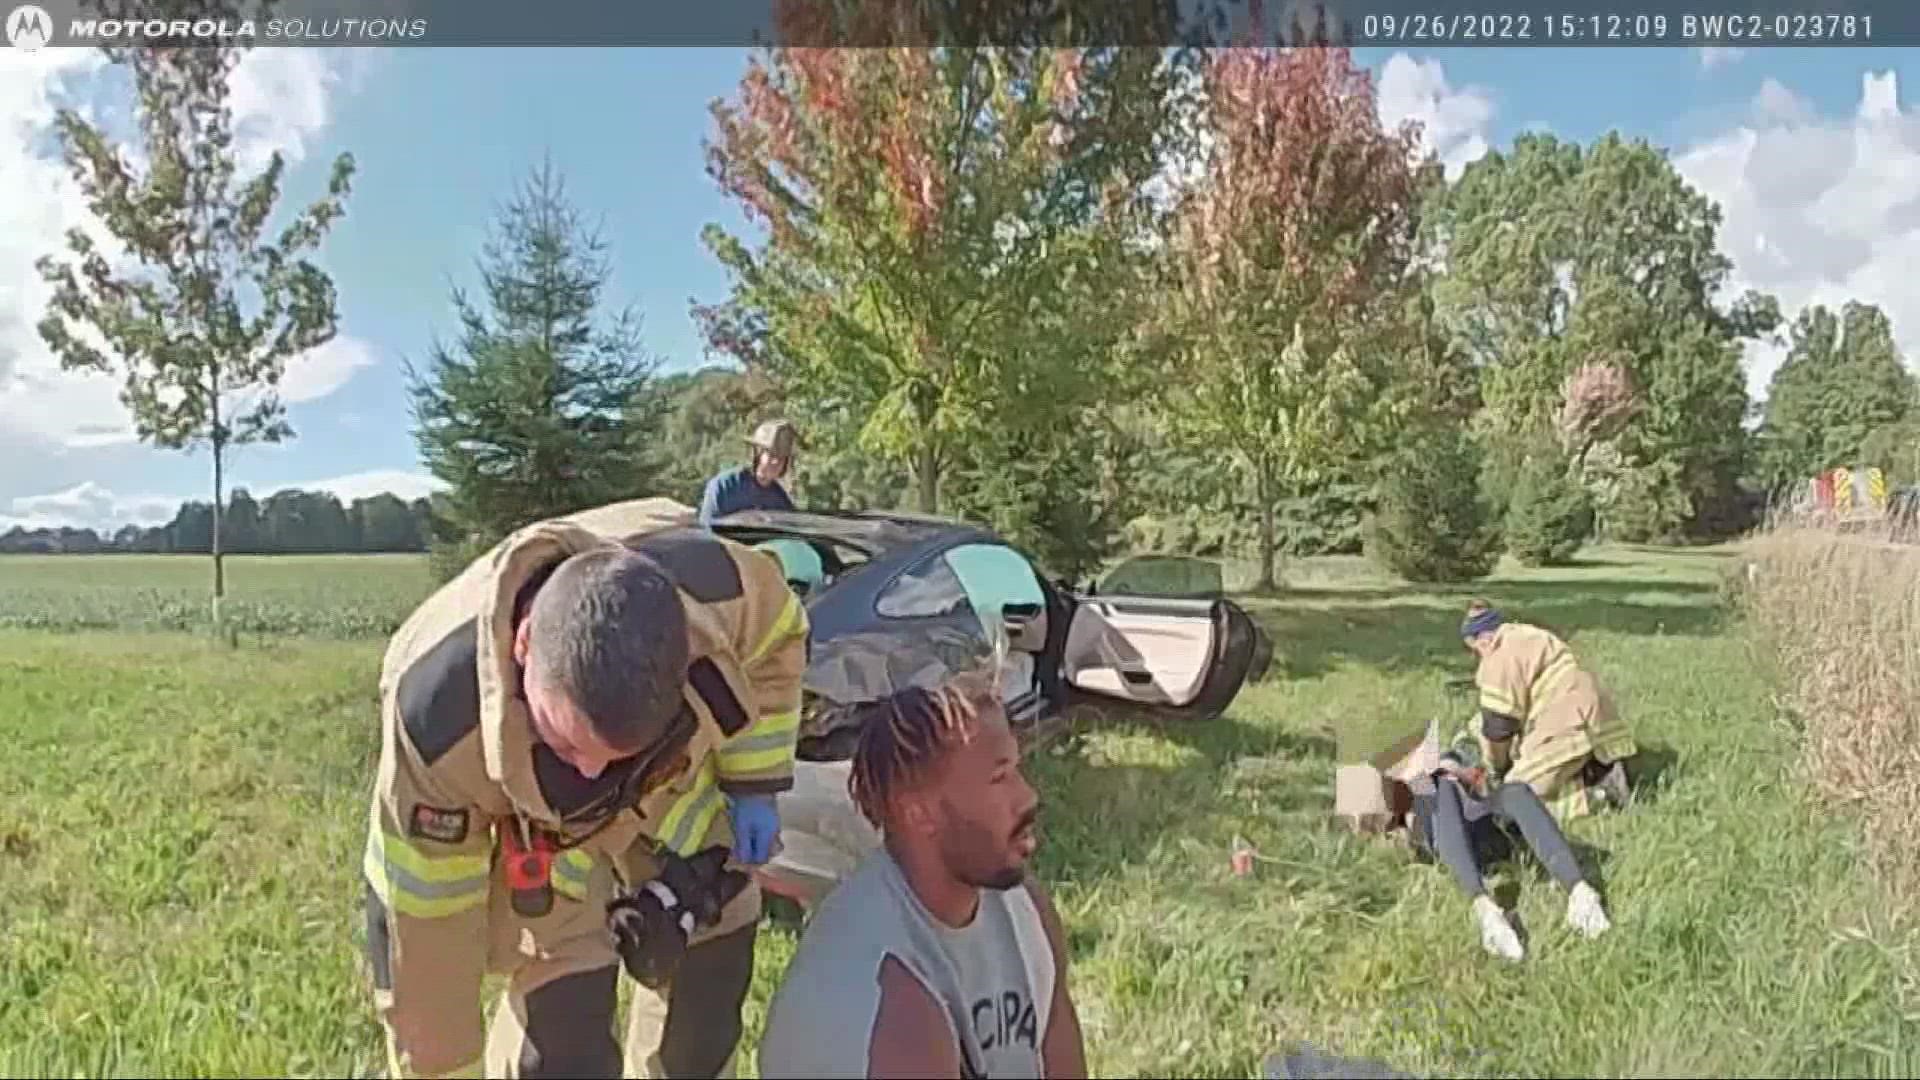 WATCH: Bodycam video shows aftermath of Myles Garrett car crash 